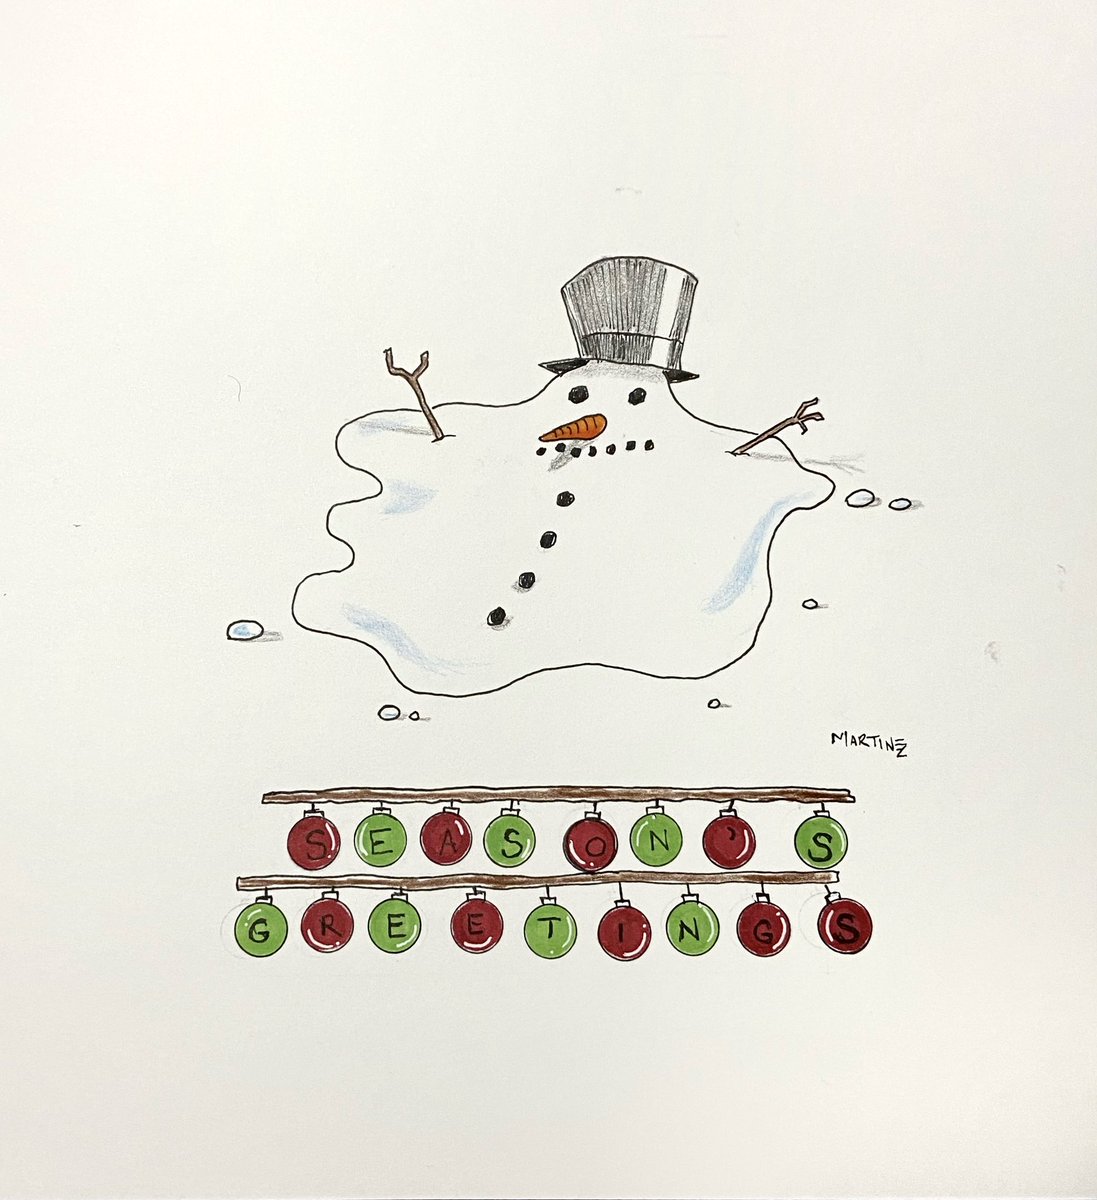 ‘Tis the season to be funny. Poor Frosty isn’t so frosty. More jolly Xmas card type humor in the coming days, ho-ho-ho. #artbynuwaver74 #ArtistOnTwitter #art #drawing #FrostyTheSnowman #originalart #kofiartist #SeasonsGreetings